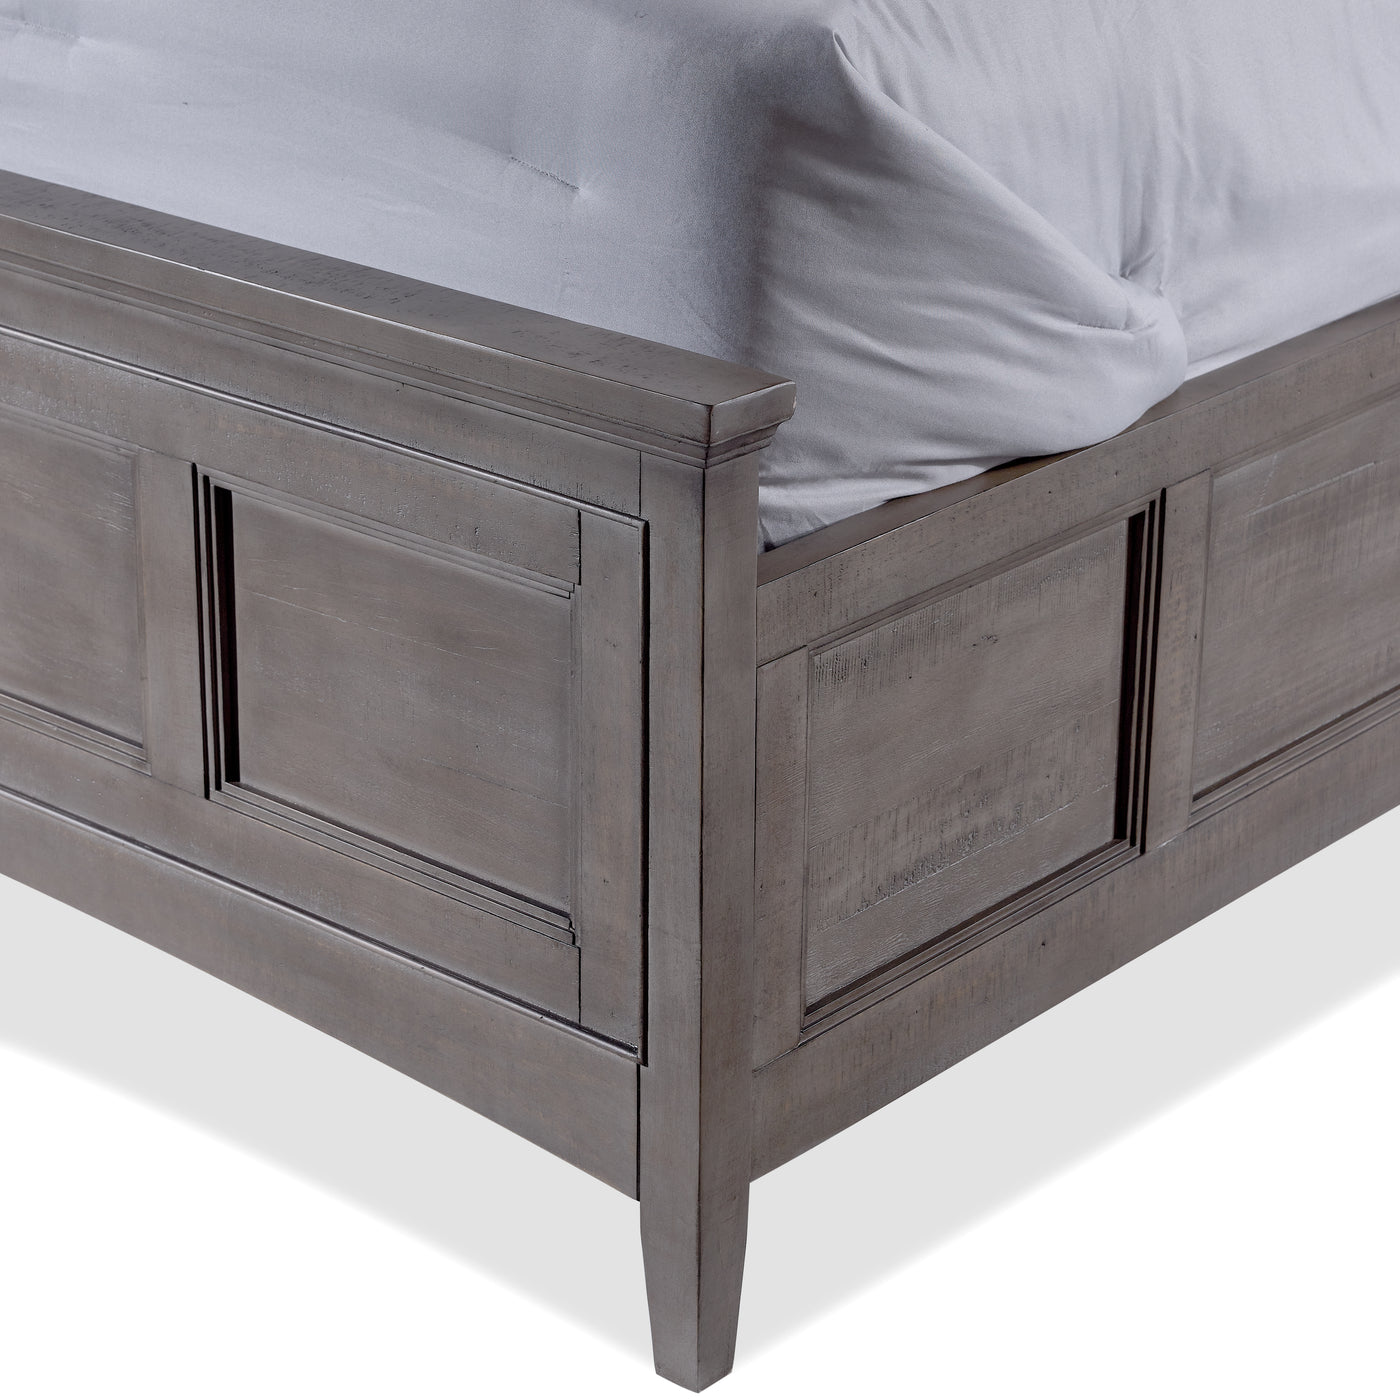 Paxton 6-Piece Queen Bedroom - Dovetail Grey